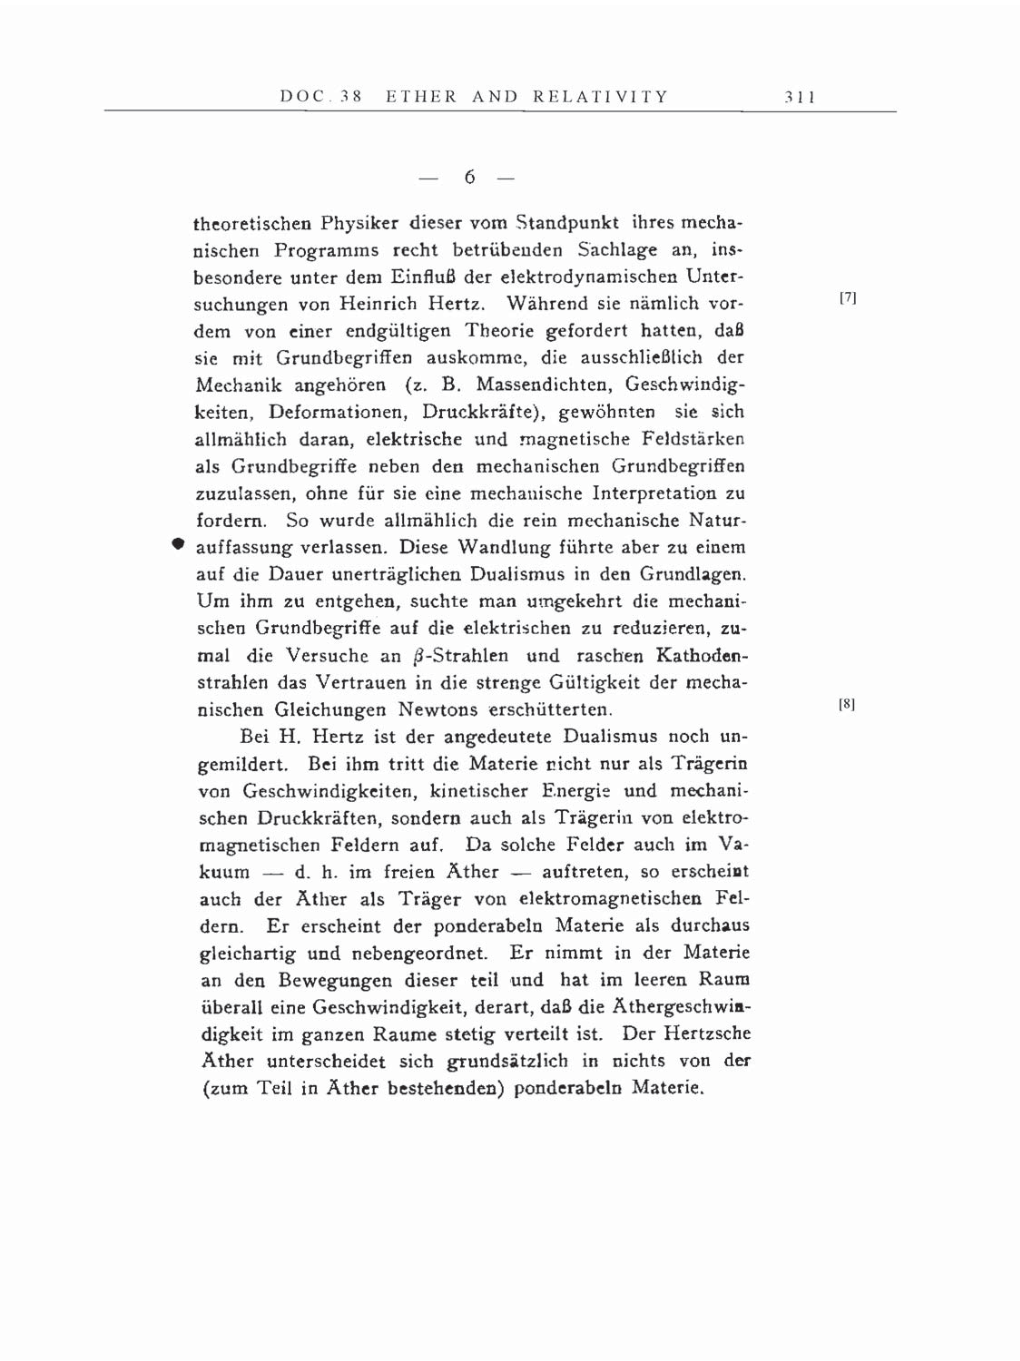 Volume 7: The Berlin Years: Writings, 1918-1921 page 311